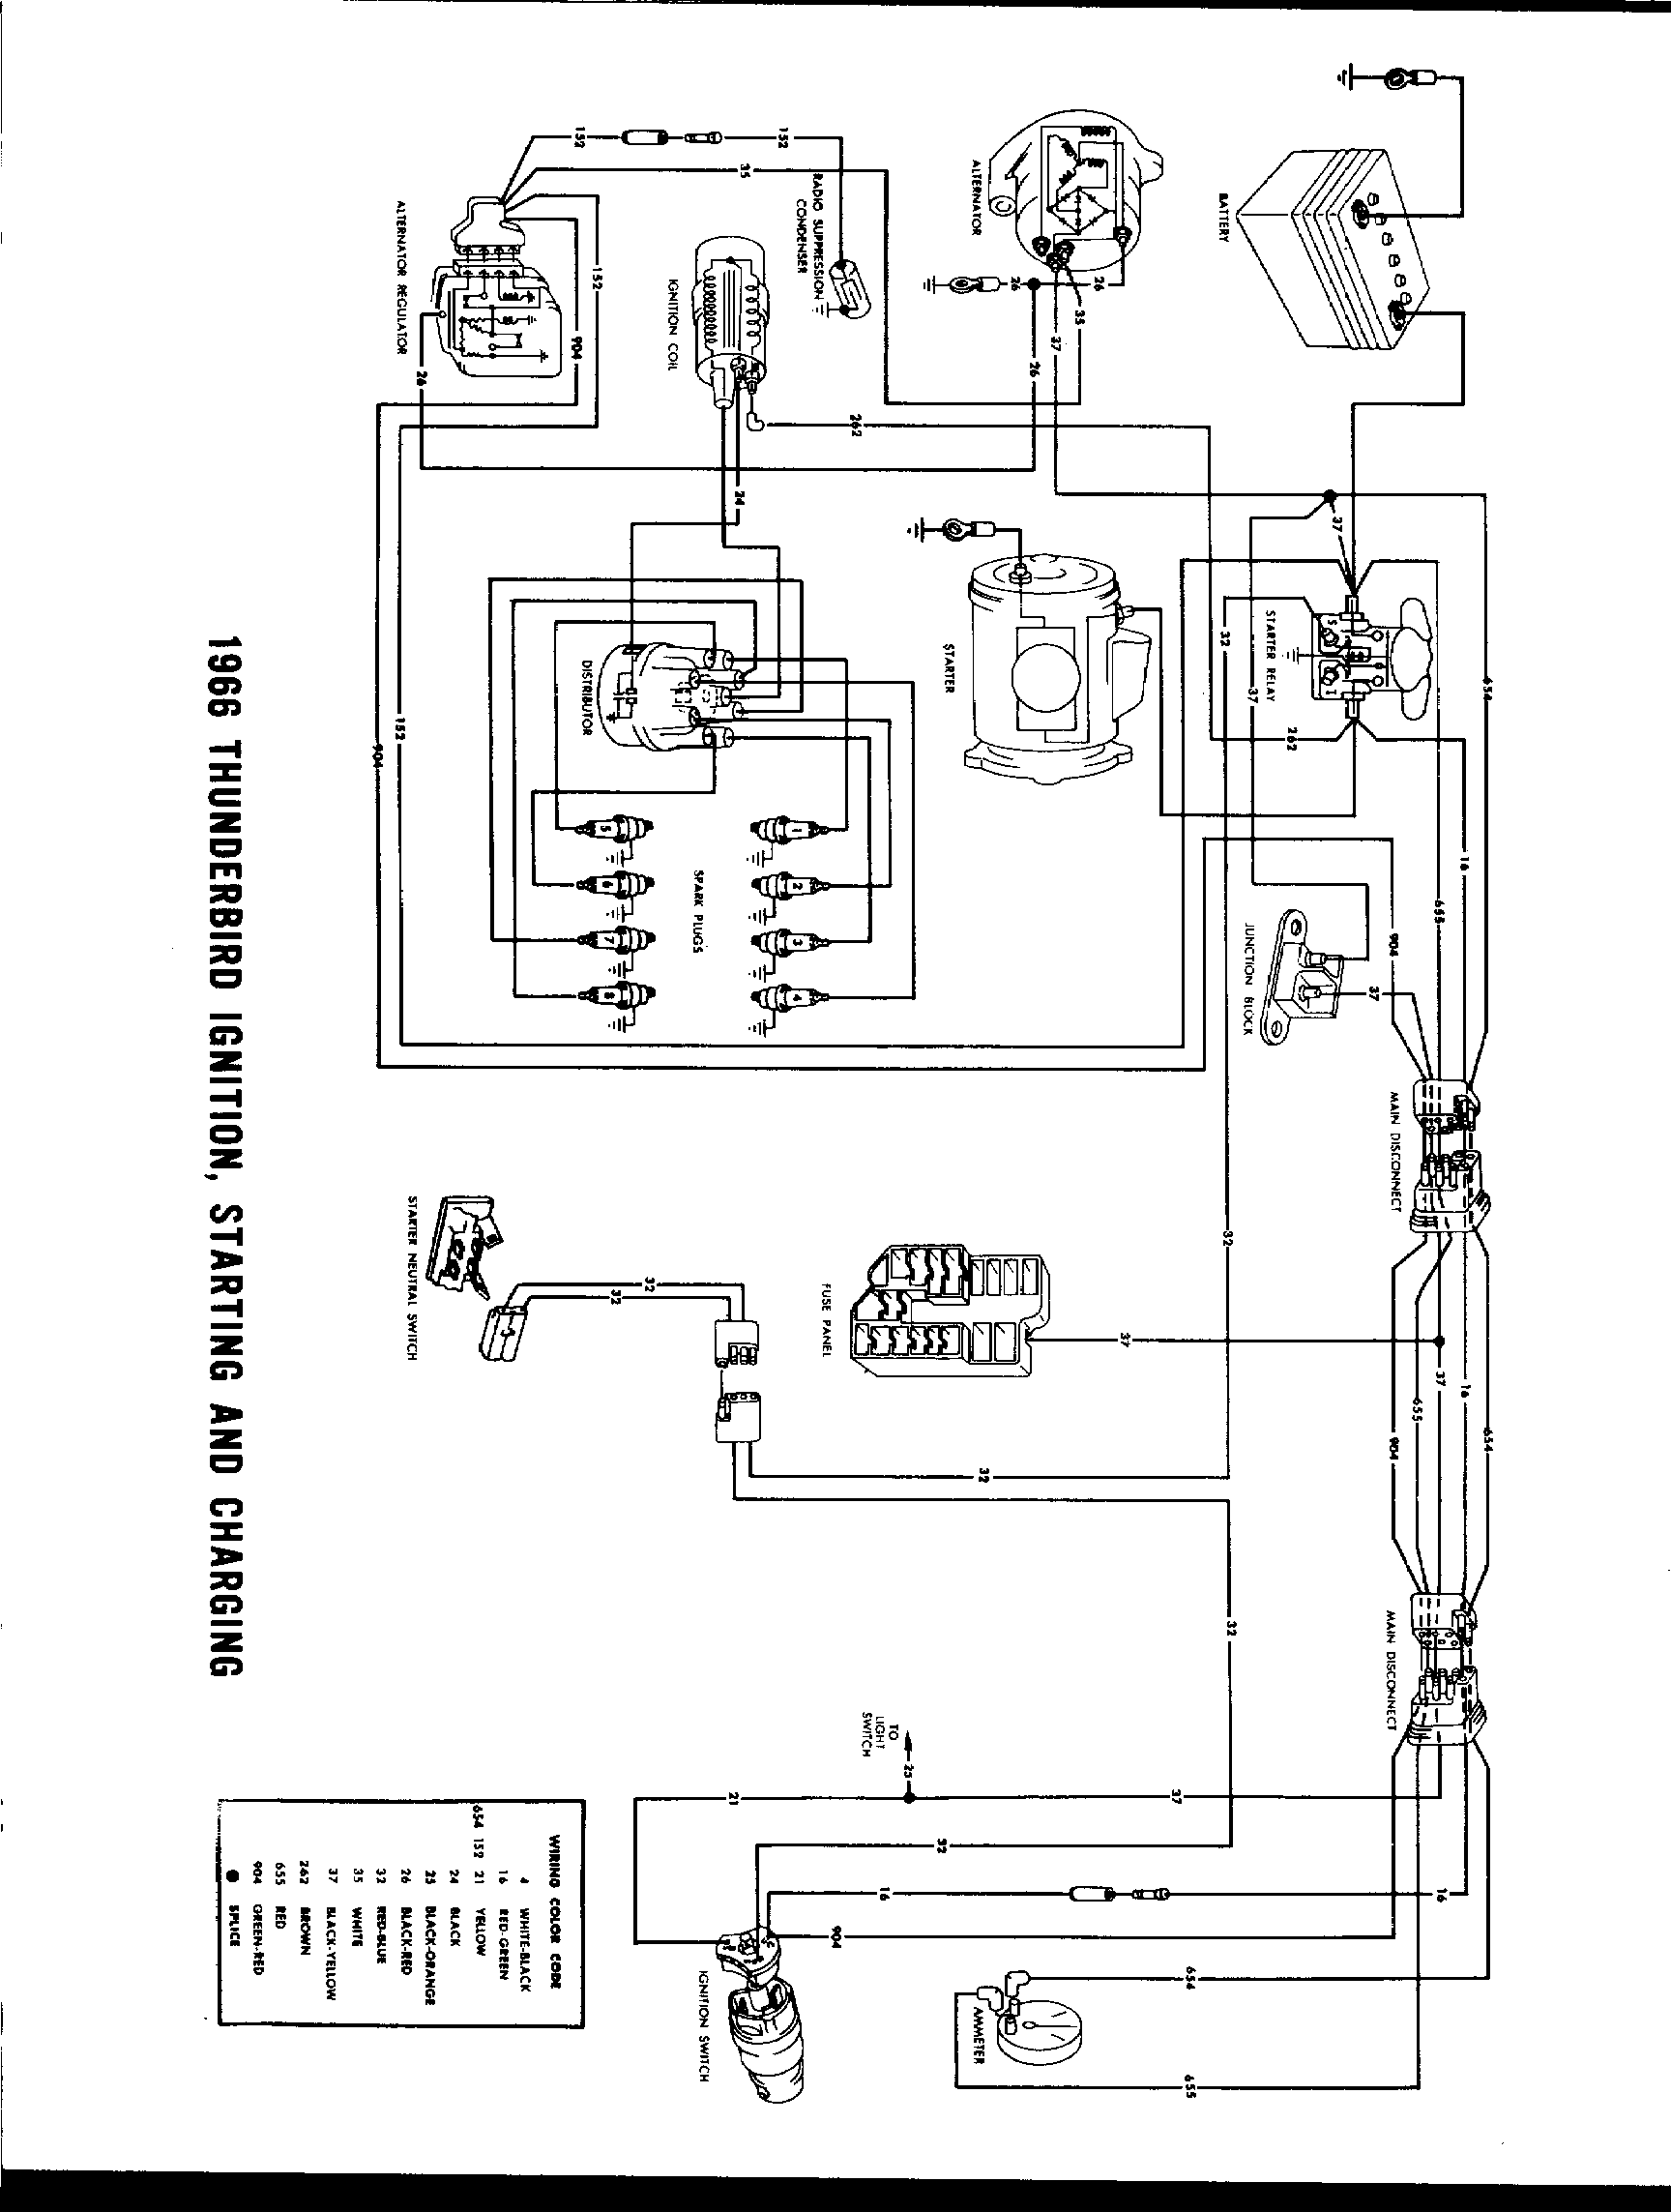 87 C10 Alternator Wiring Diagram - Wiring Diagram Networks